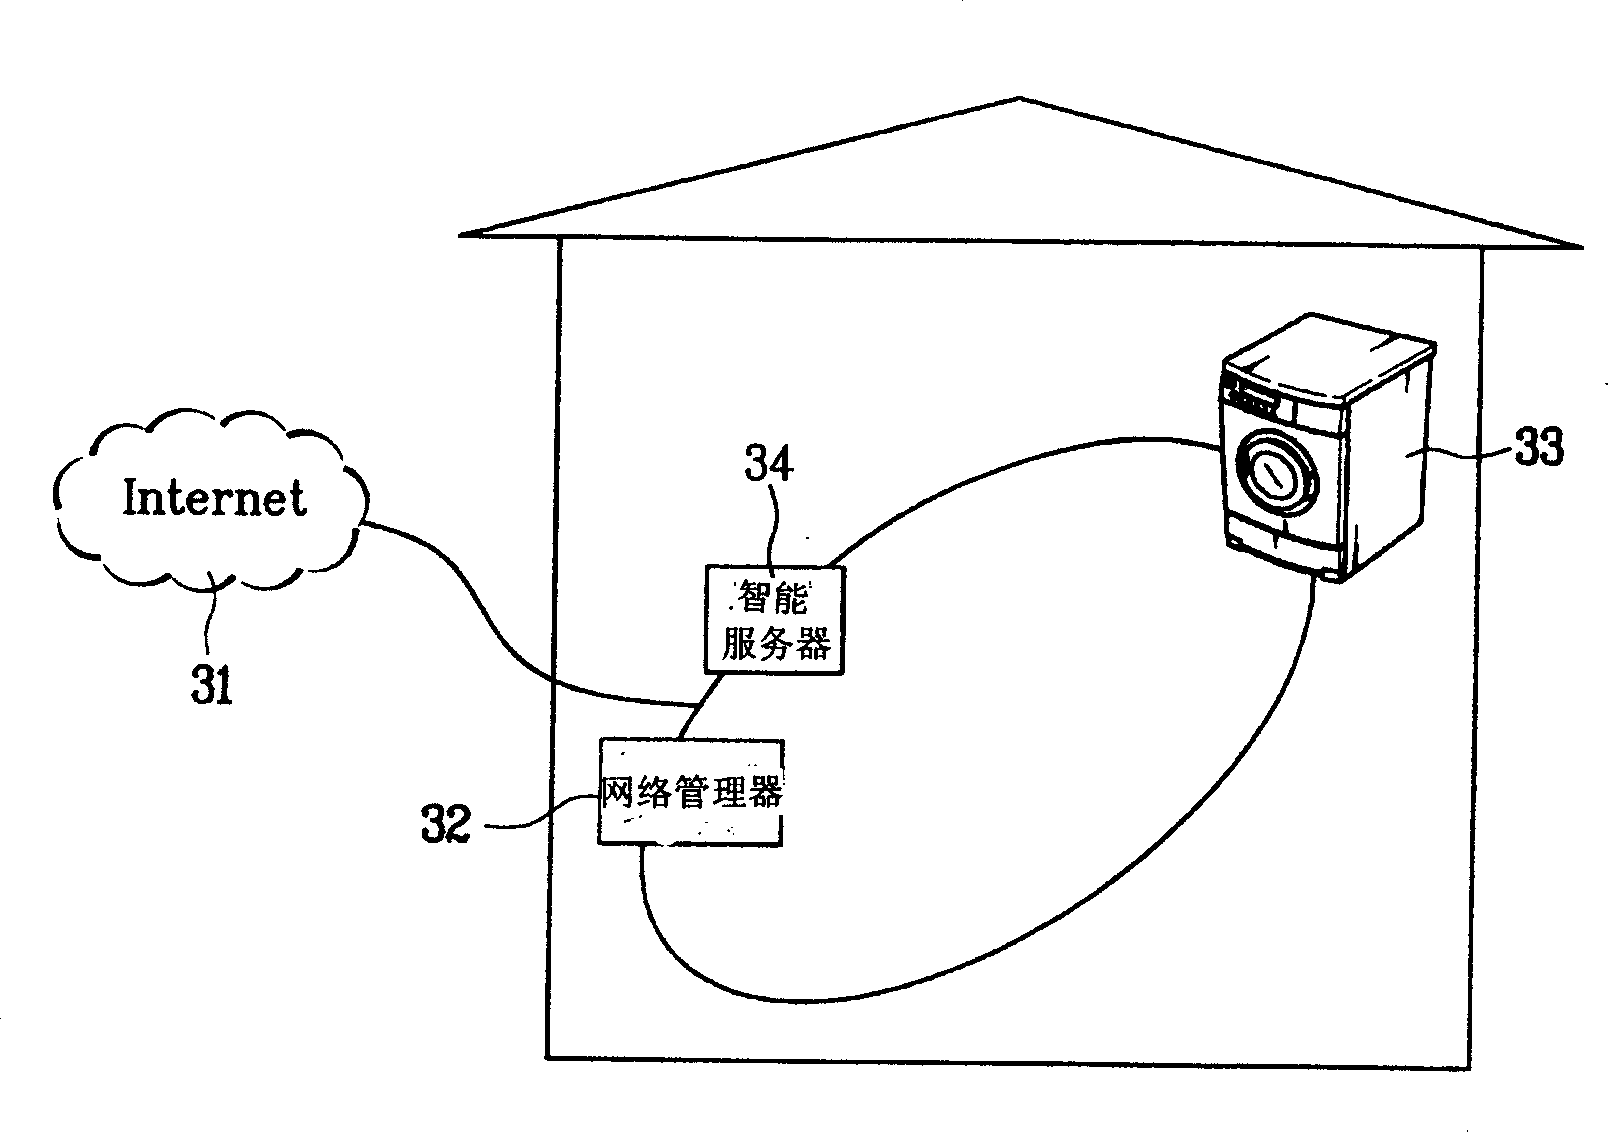 Washing machine control method using intelligent server